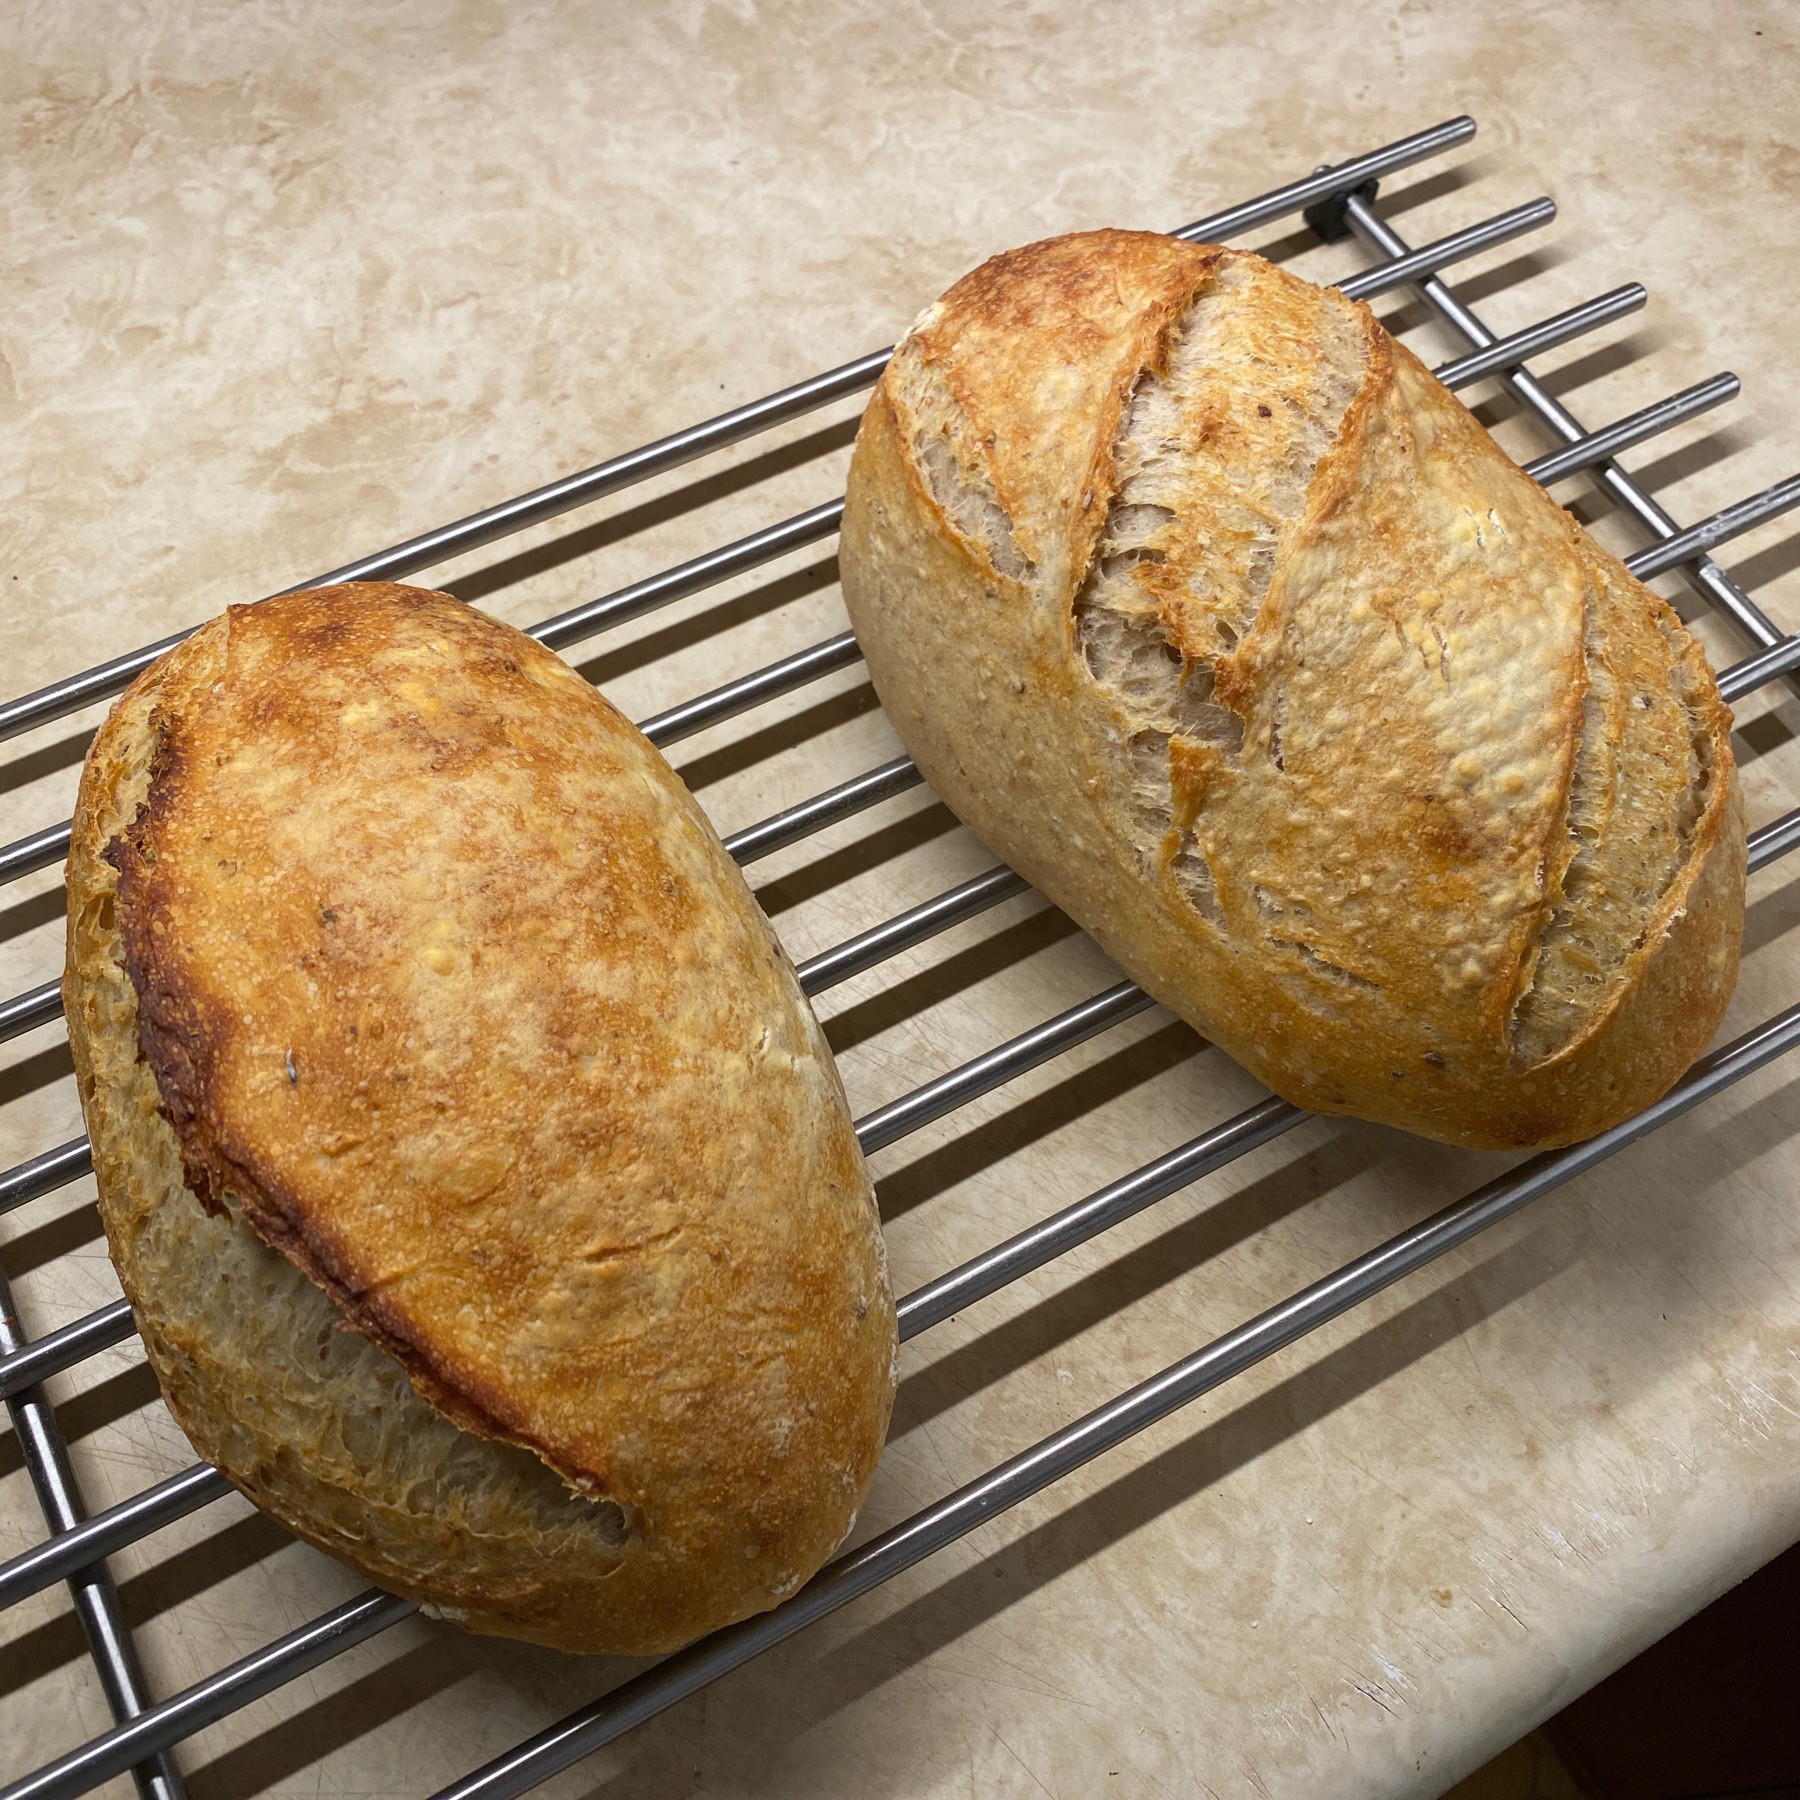 Sourdough bread cooling on rack.